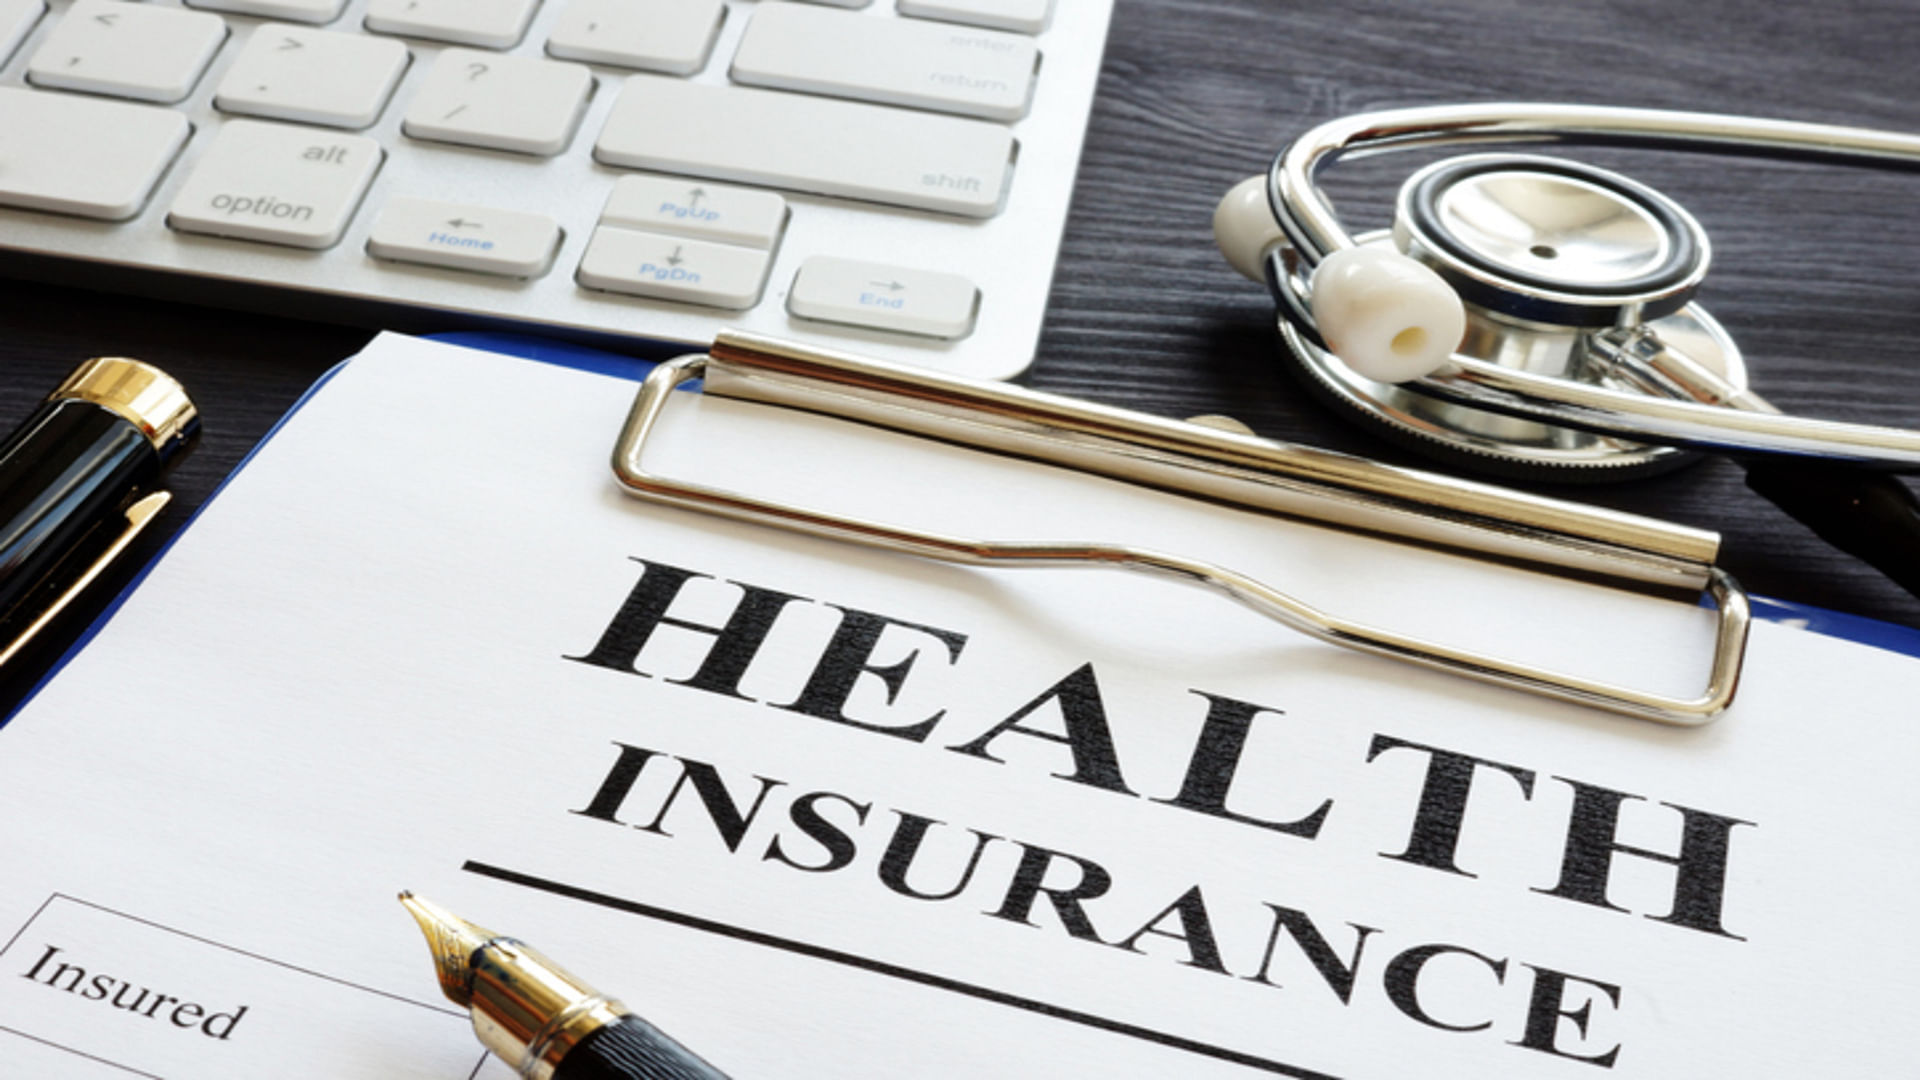 Health Insurance Tips